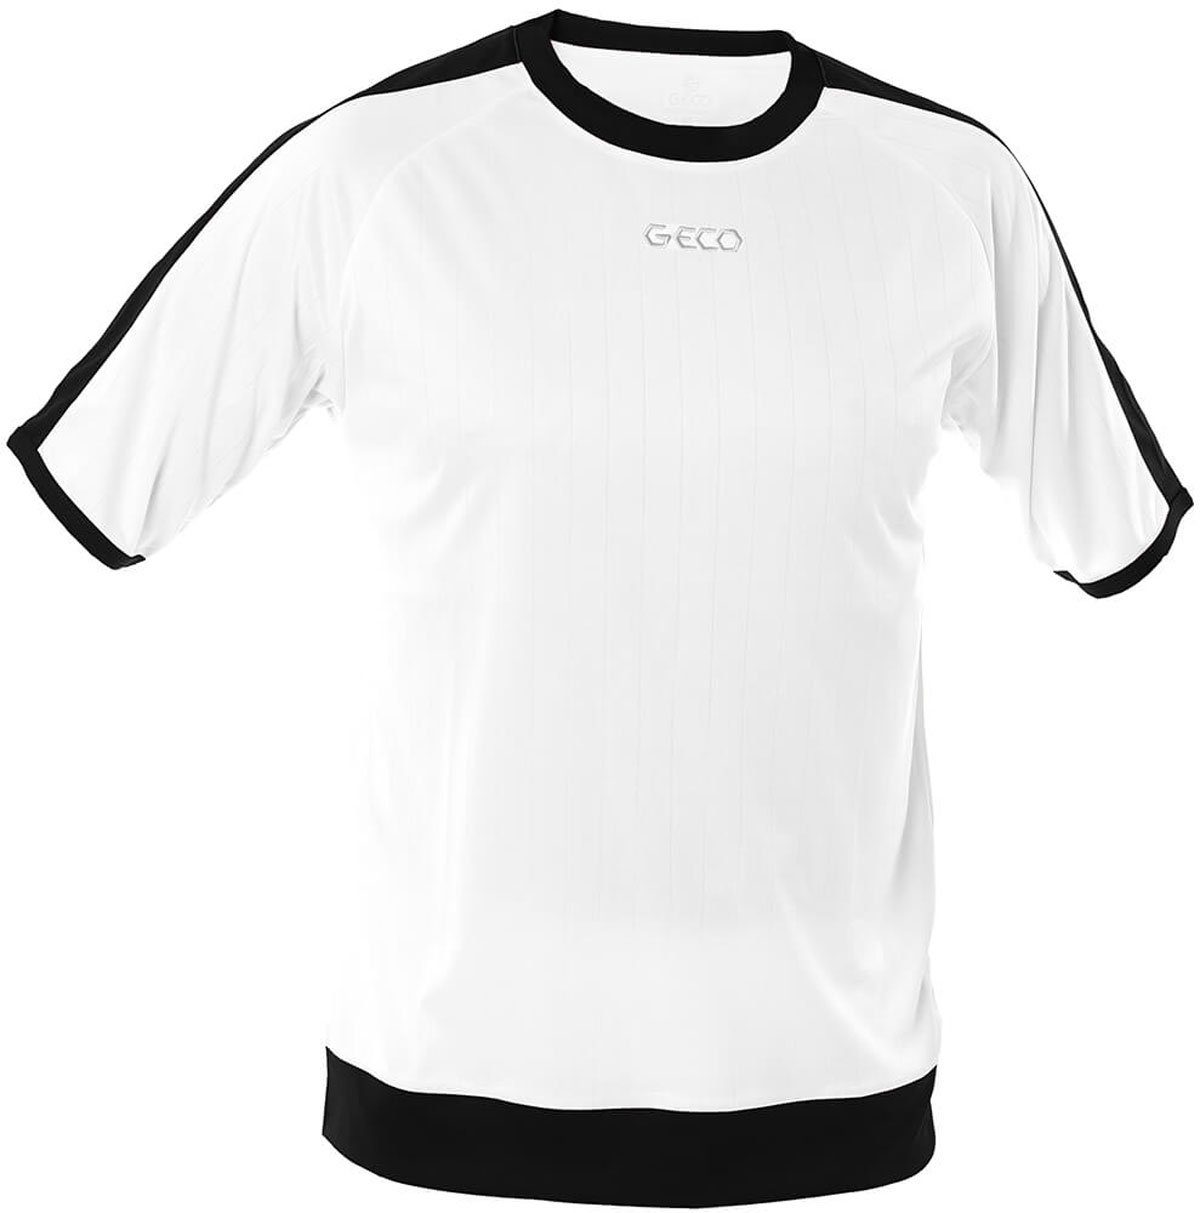 NOTOS kurzarm Sportswear Geco Geco weiß/schwarz Fußball Trikot zweifarbig Fußballtrikot